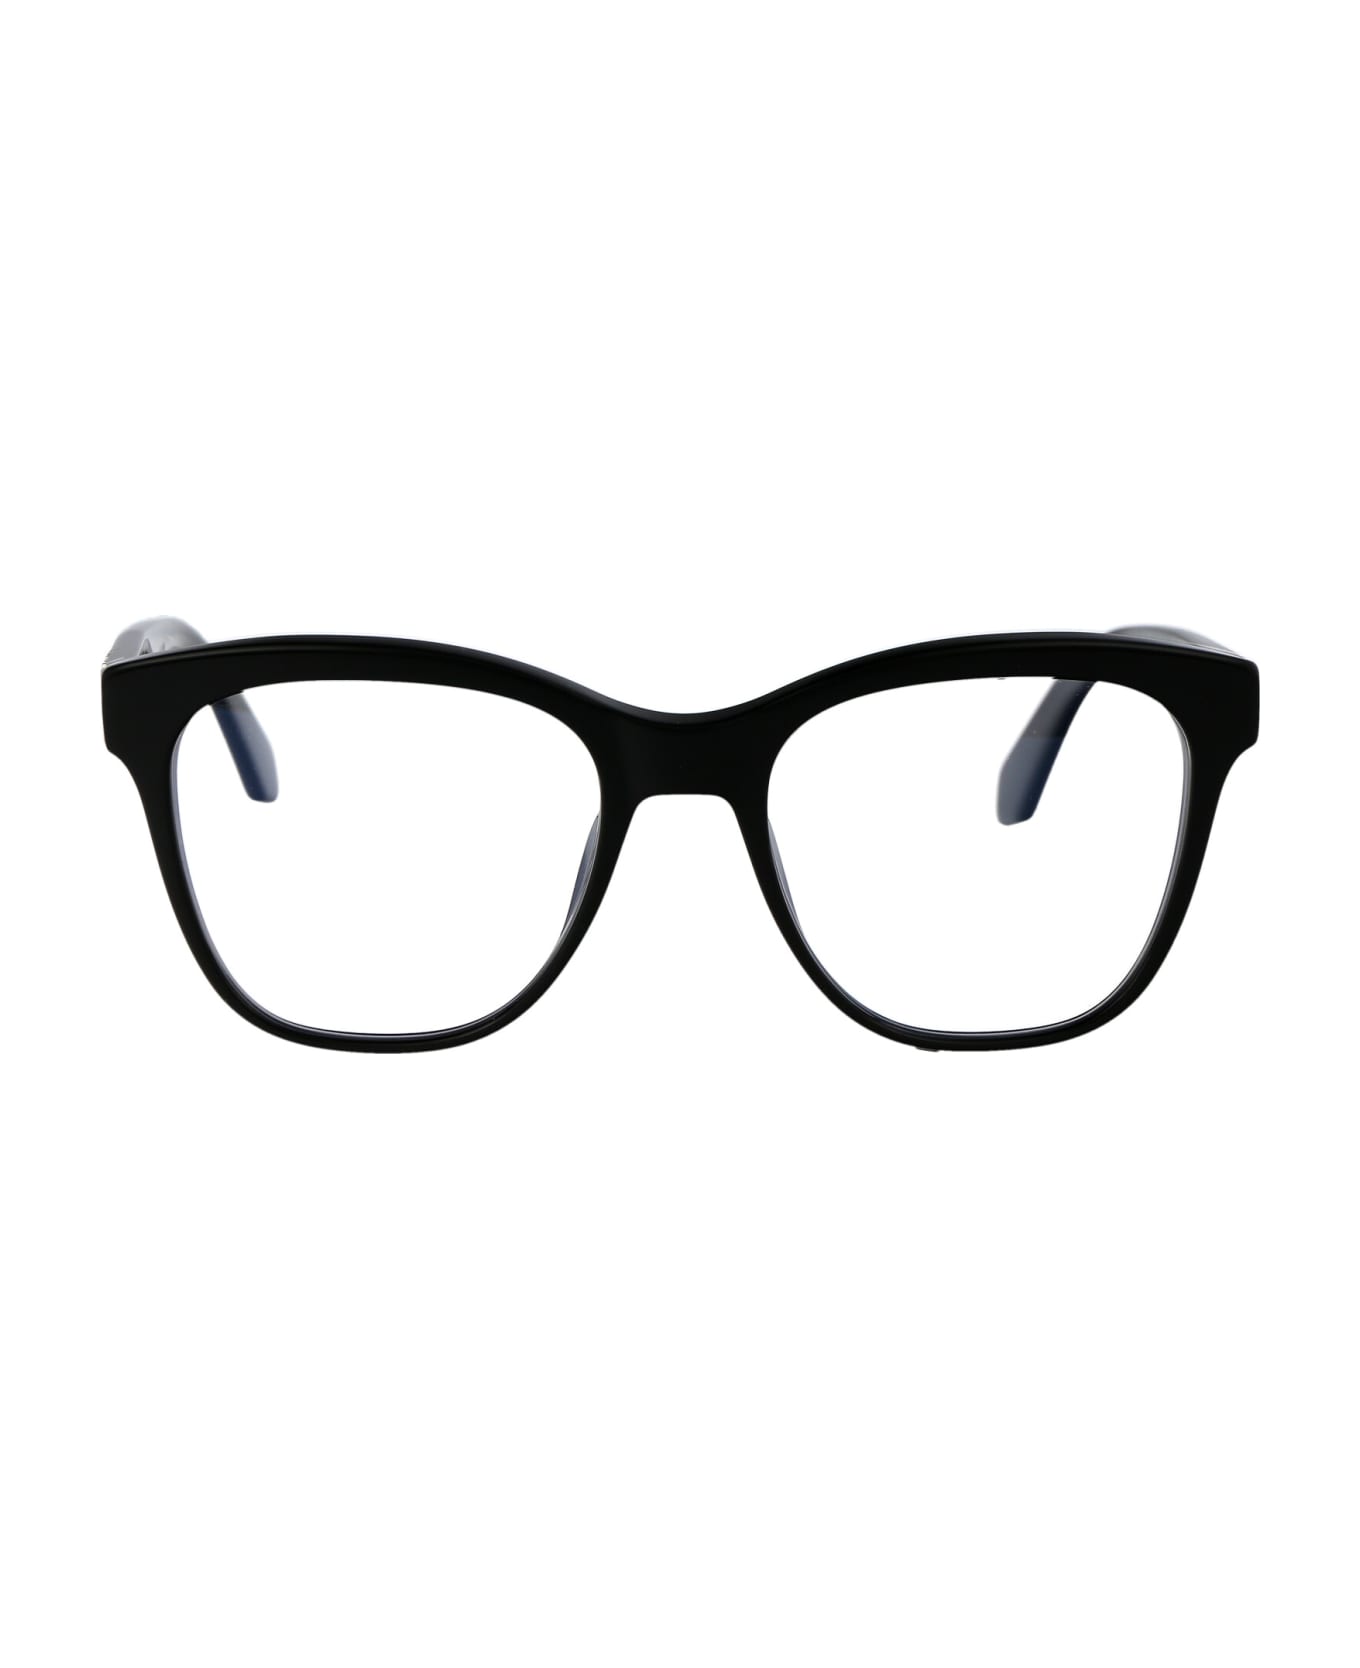 Off-White Optical Style 69 Glasses - 1000 BLACK